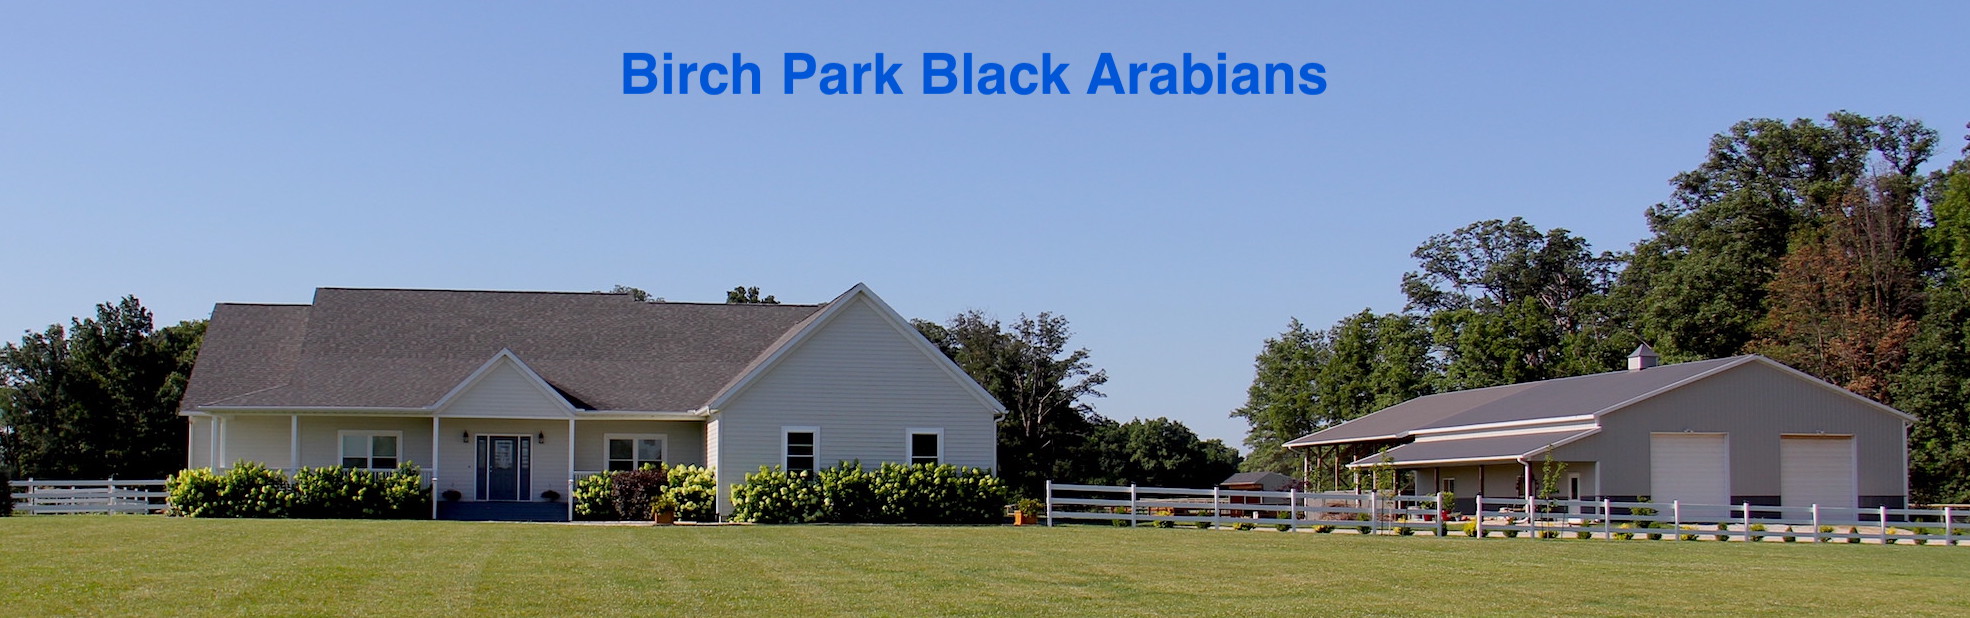 Birch Park Black Arabians